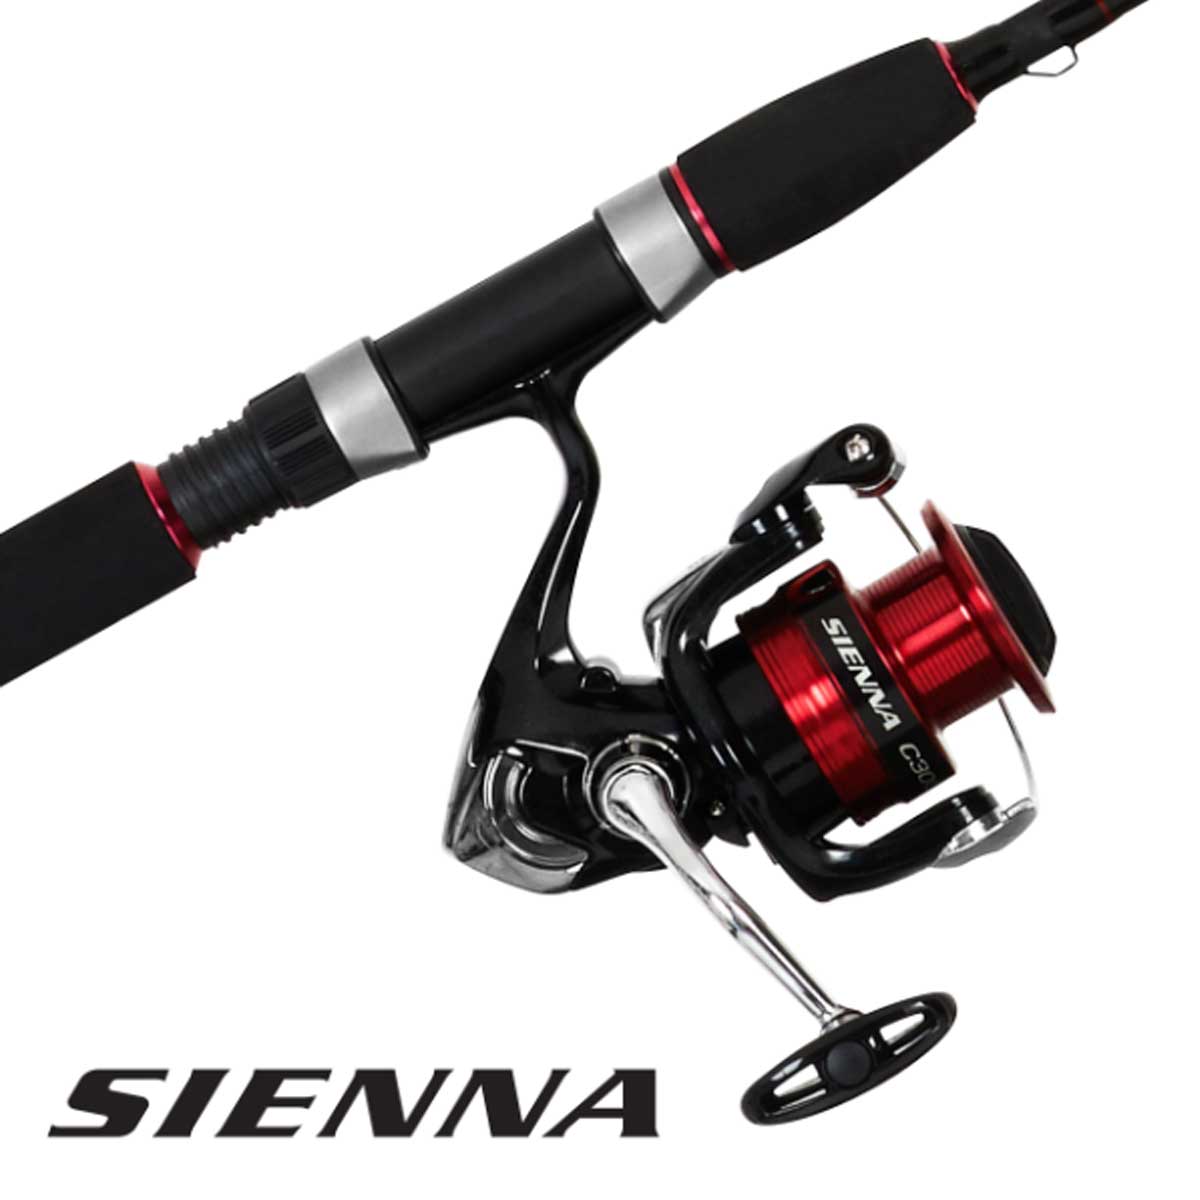 Shimano SIENNA Estuary Spin combo 2500 reel-7' 2 piece 2-4 kg rod